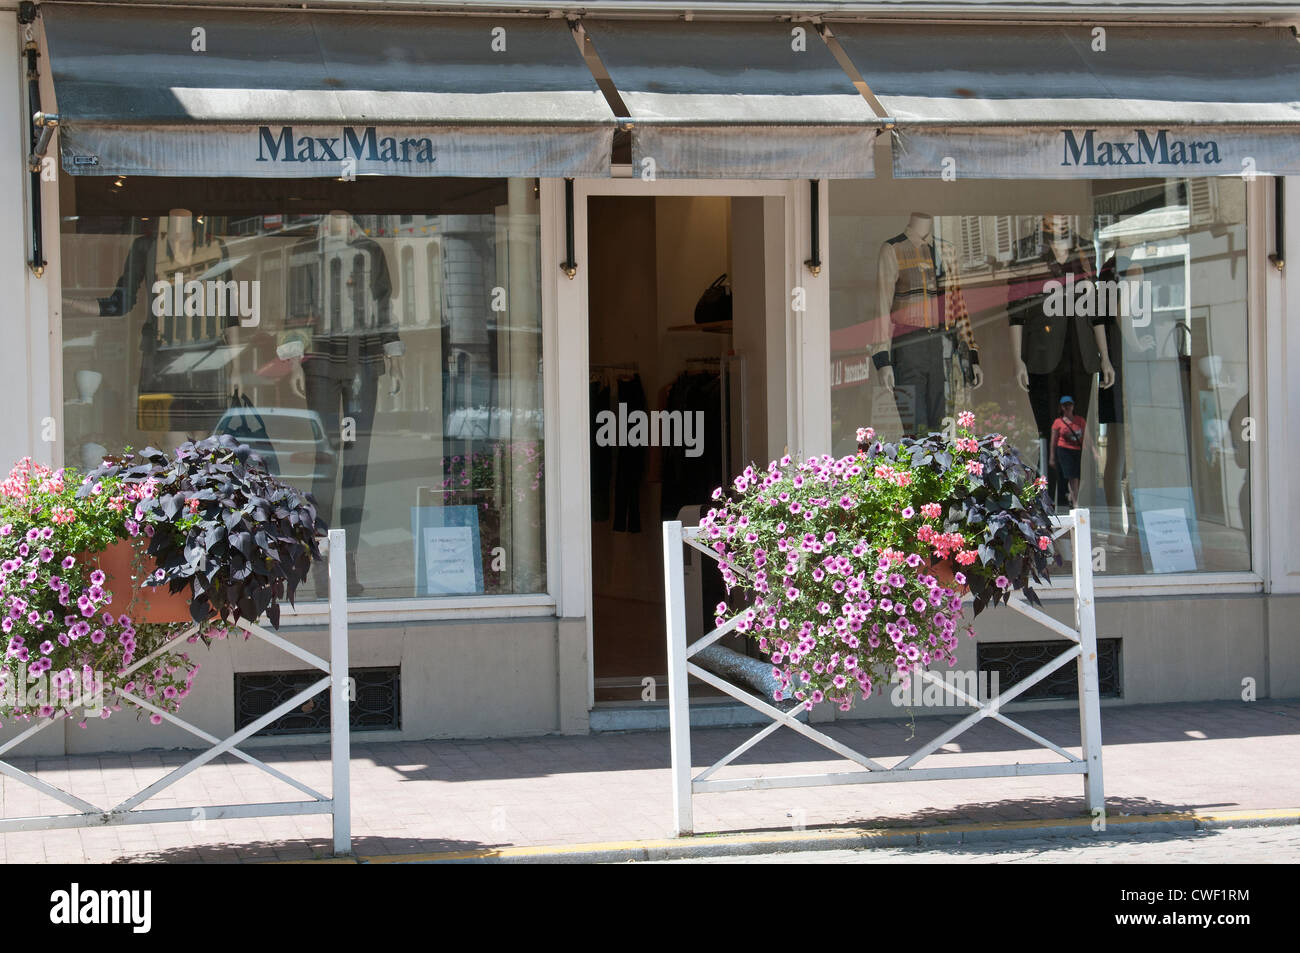 MaxMara fashion store in Pau southwest France Stock Photo